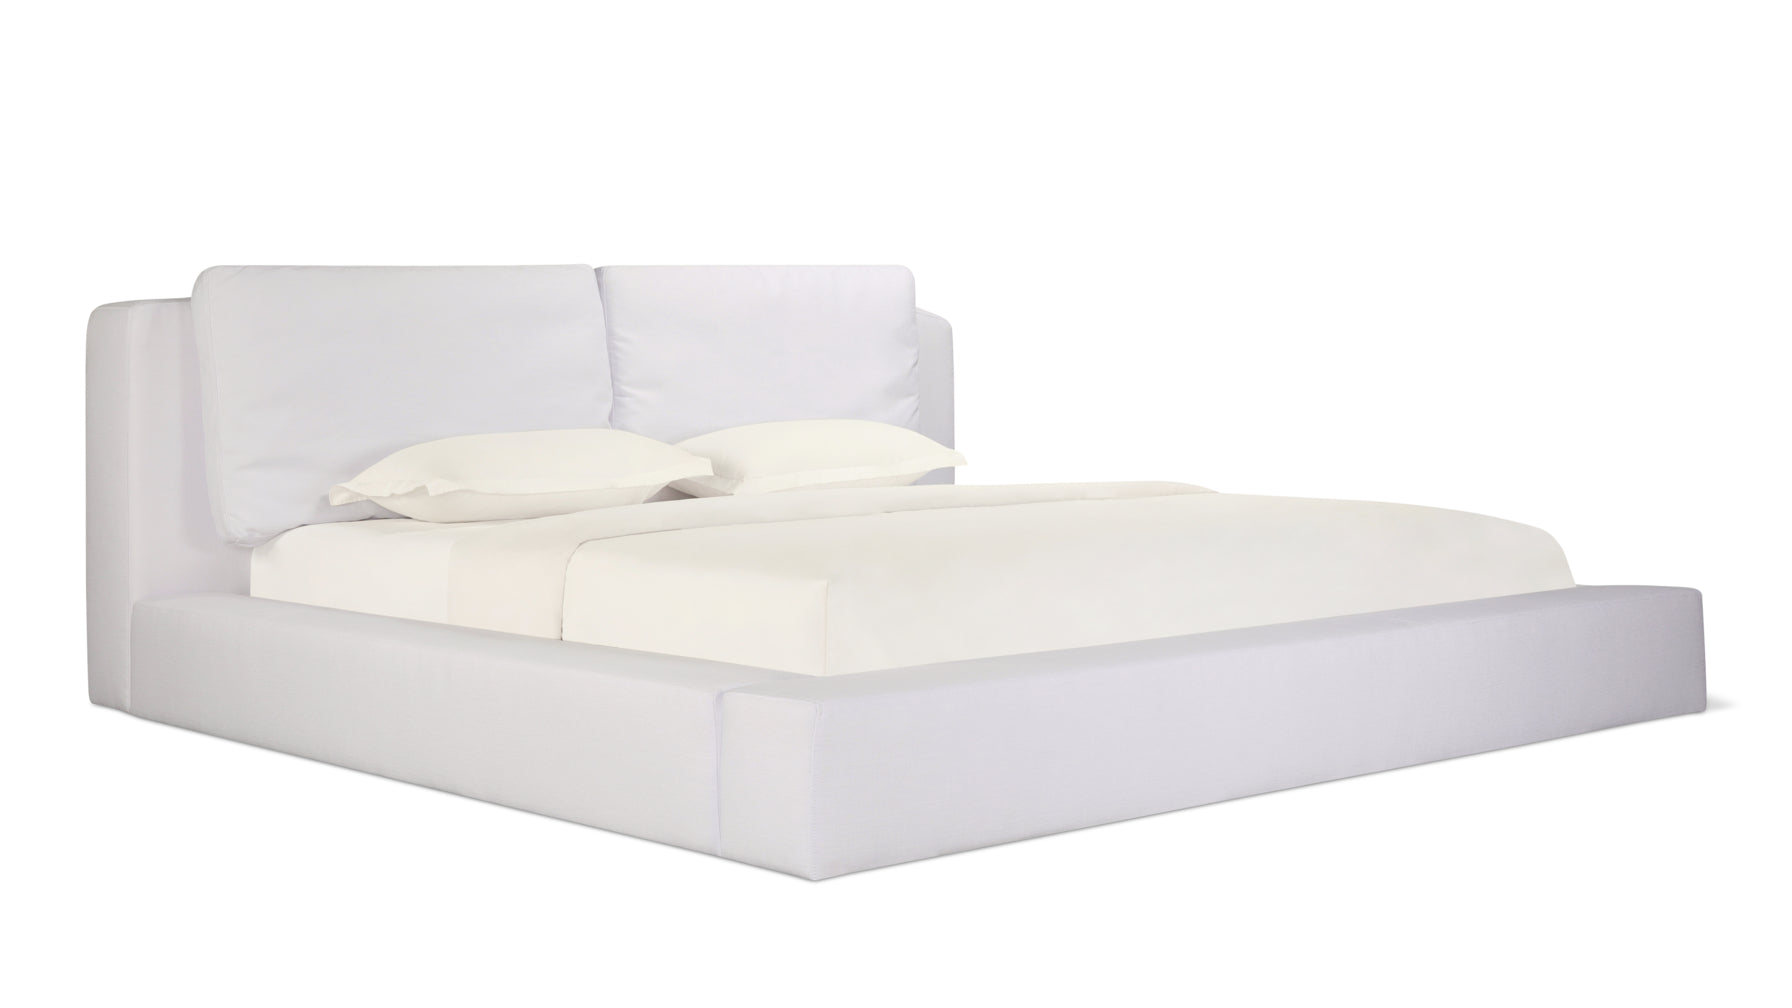 Movie Night™ Bed, King, White - Image 9